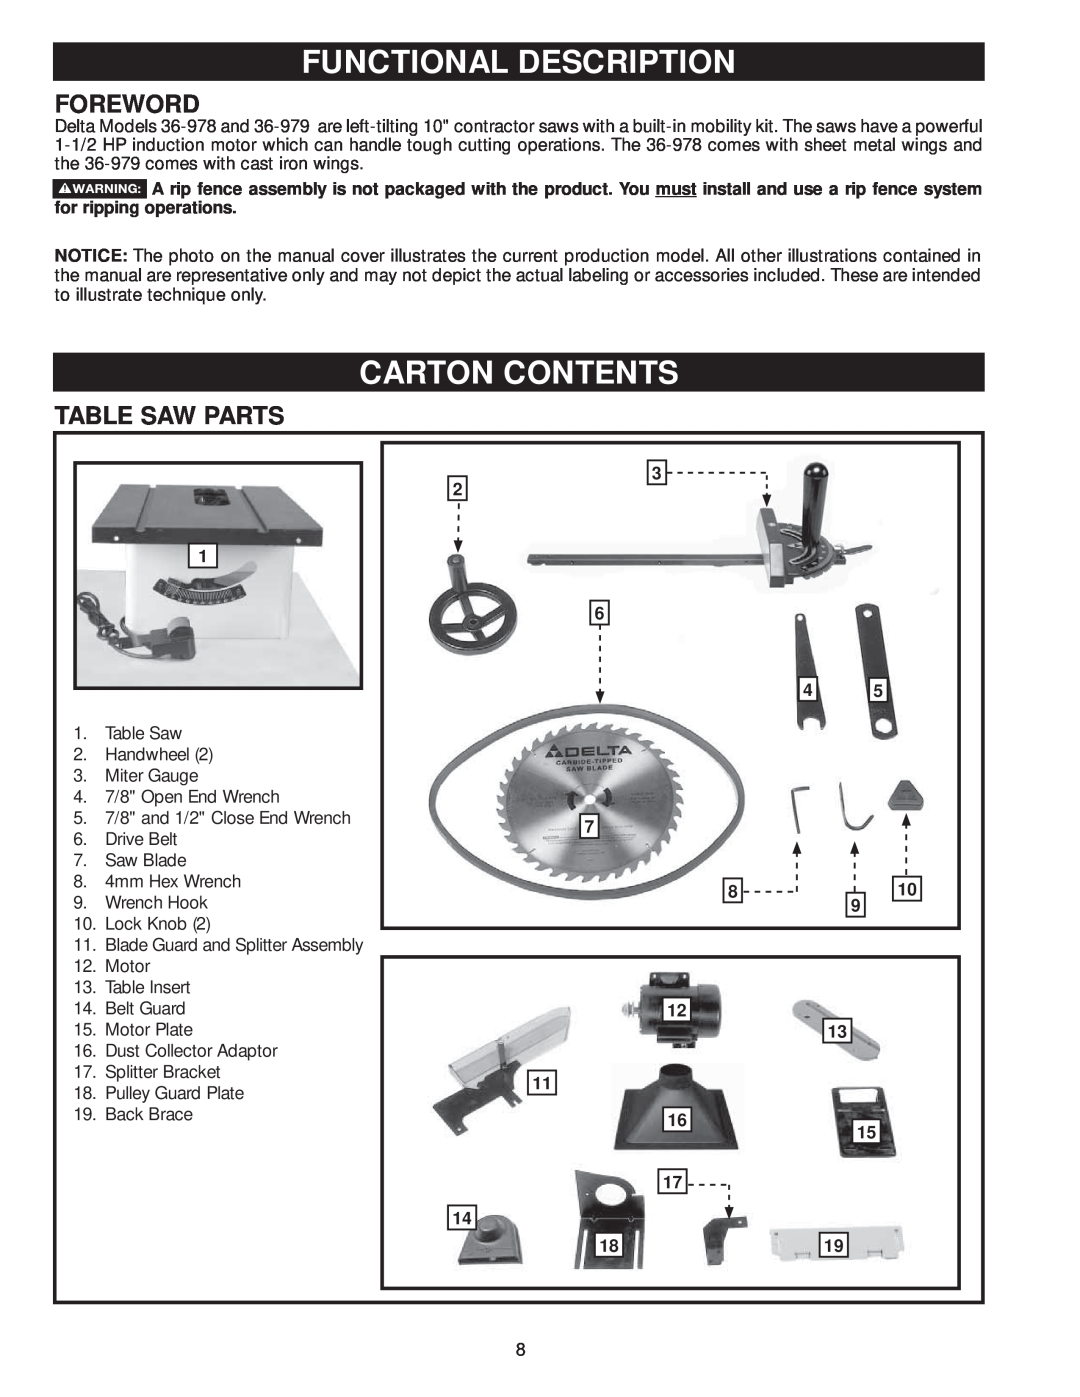 Delta 36-979, 36-978 instruction manual Functional Description, Carton Contents, Foreword, Table Saw Parts 